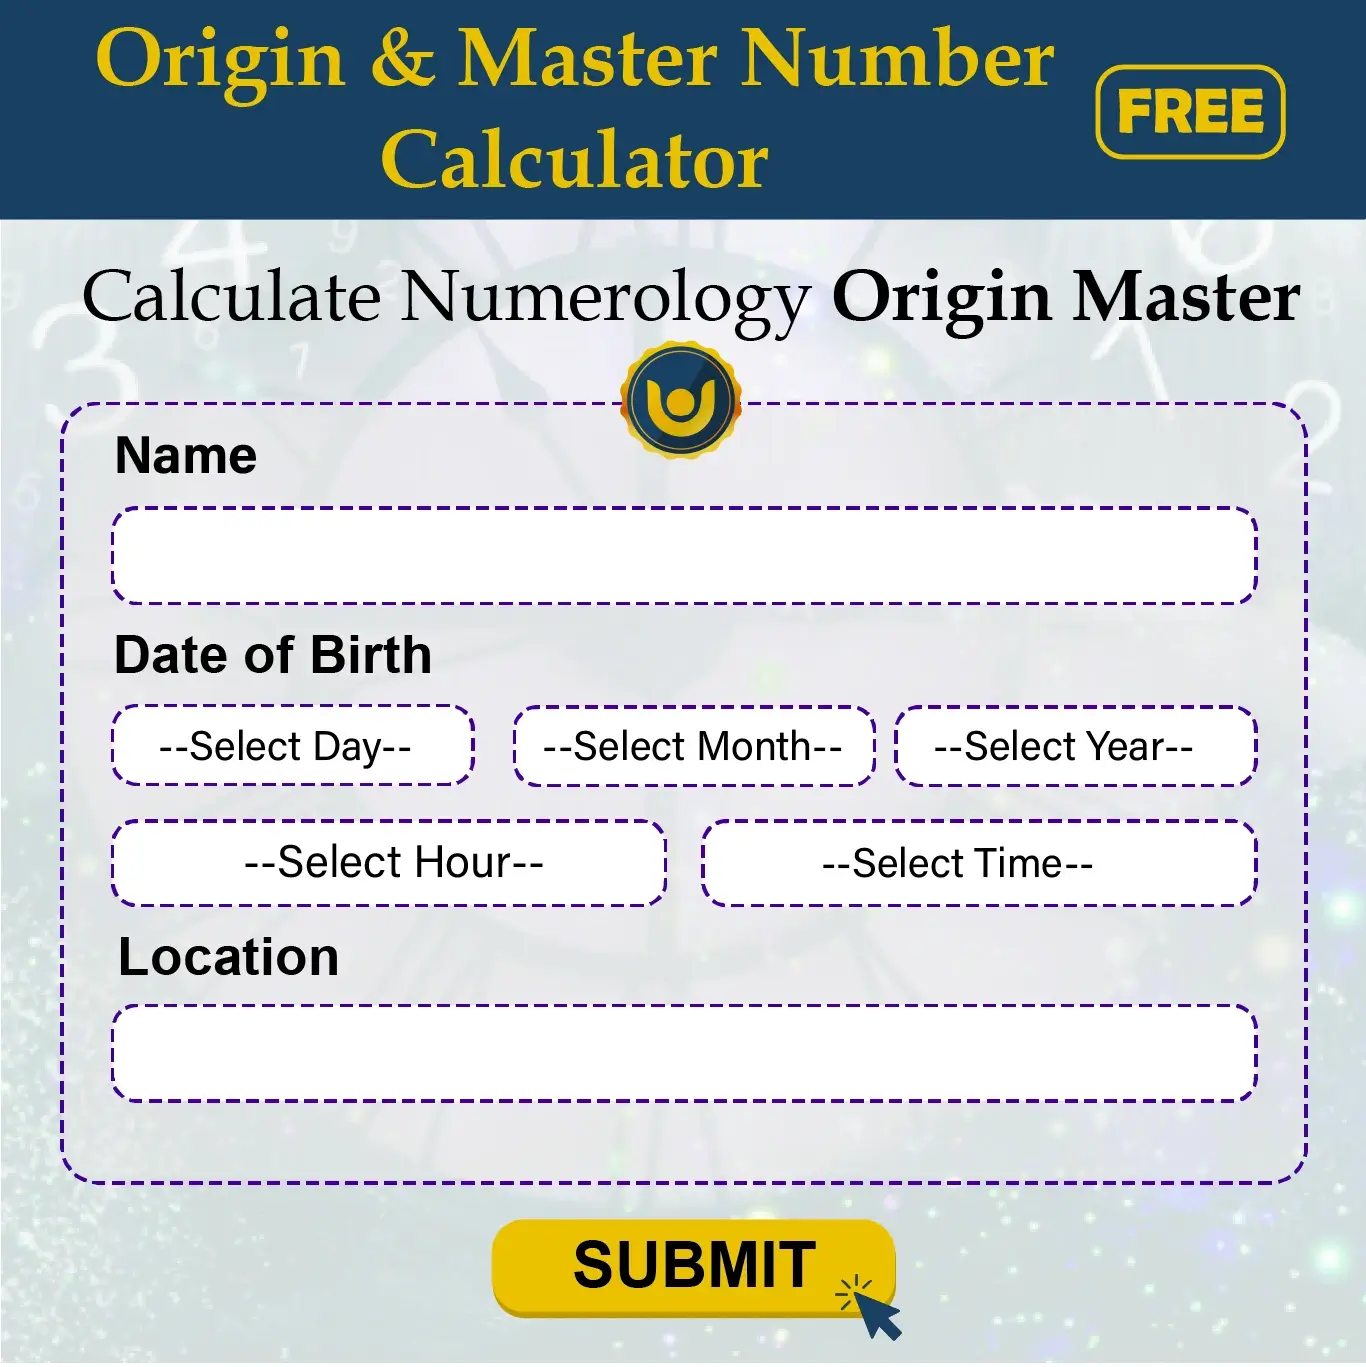 Numerology Origin Master Calculator